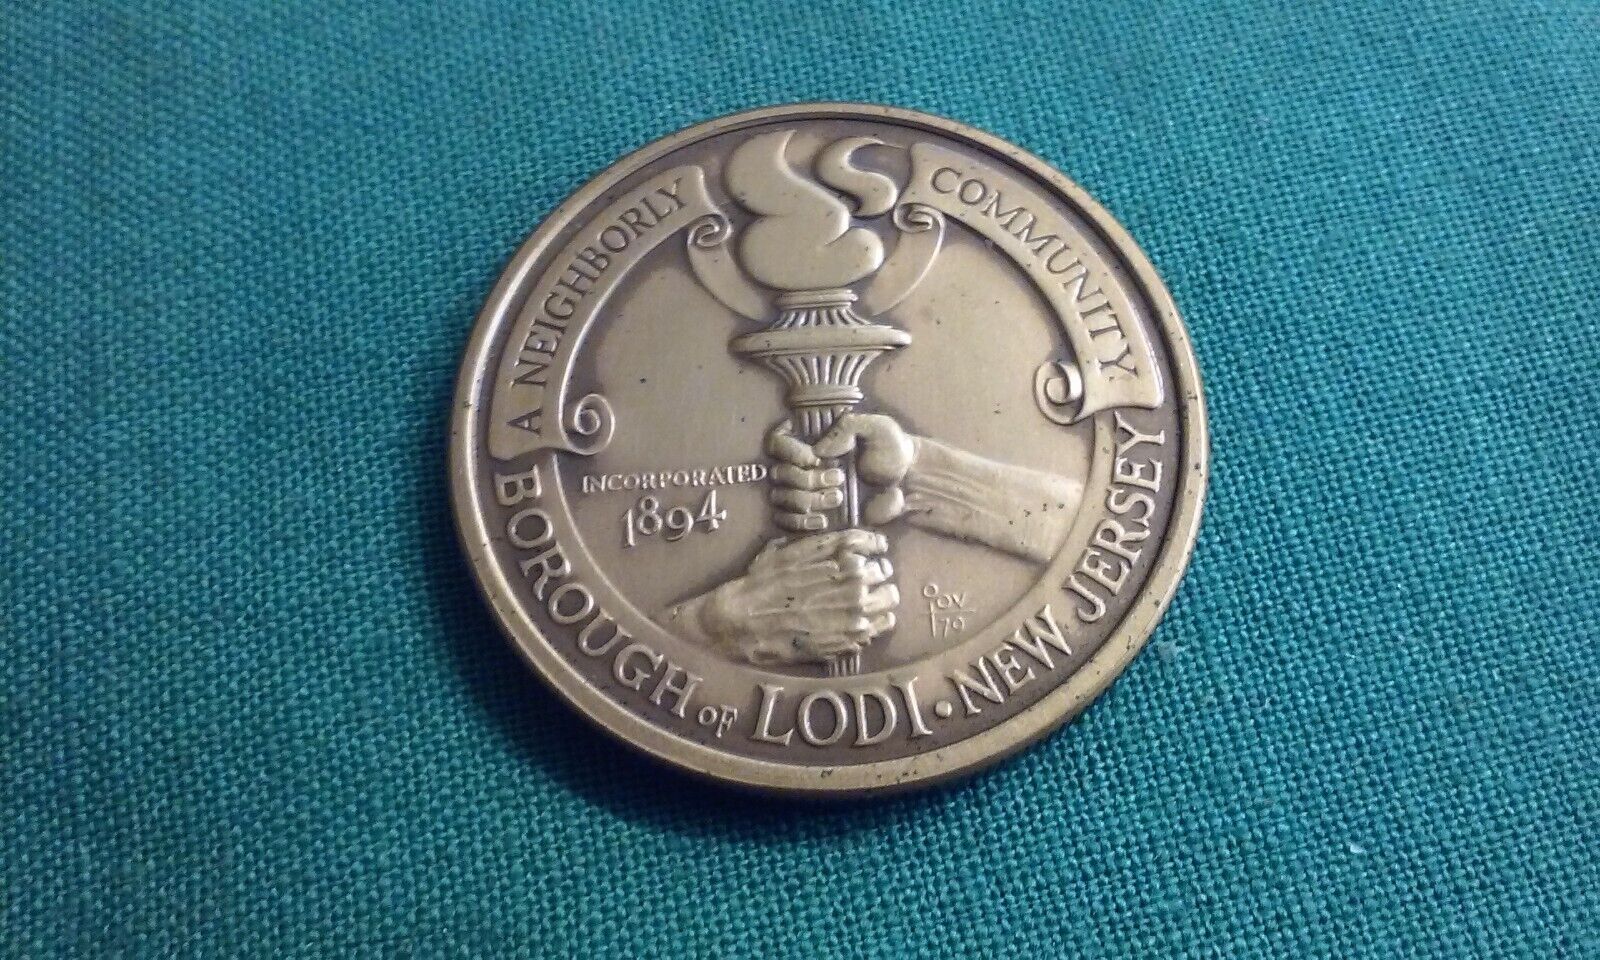 Vintage Rare 1980 Lodi New Jersey Commemorative Coin - 86th Year Anniversary